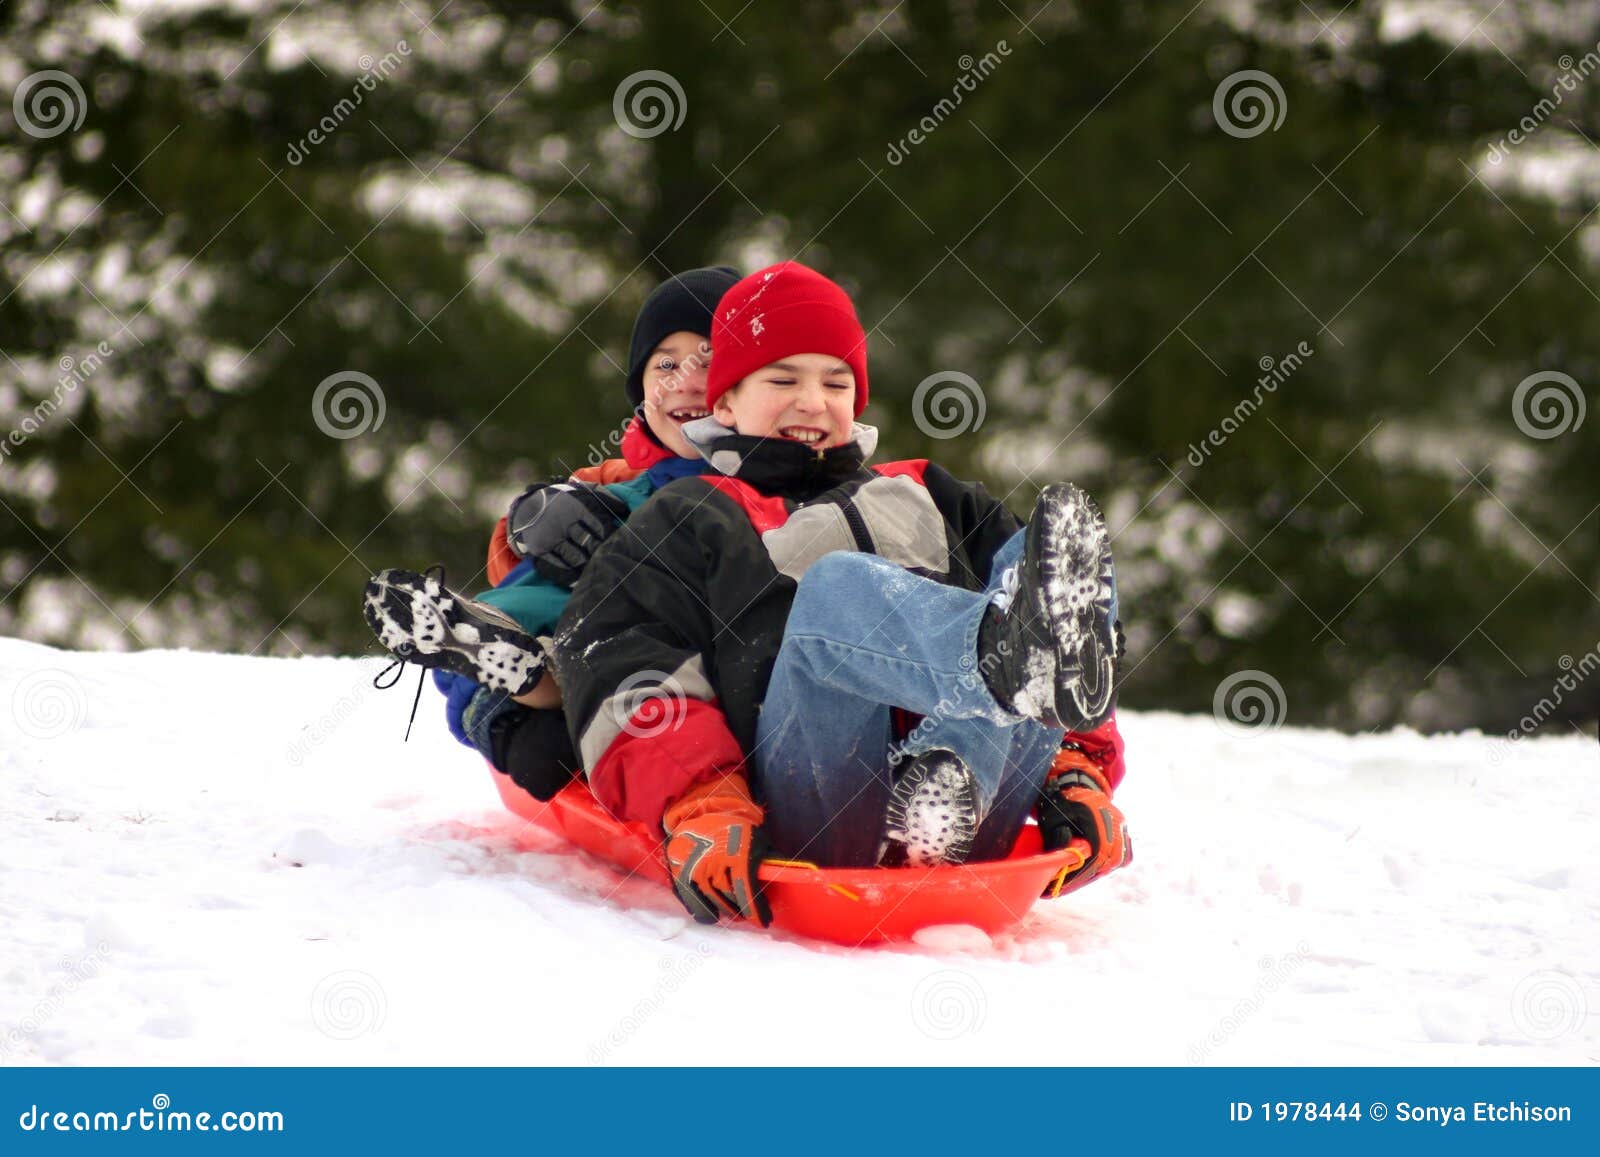 boys sledding